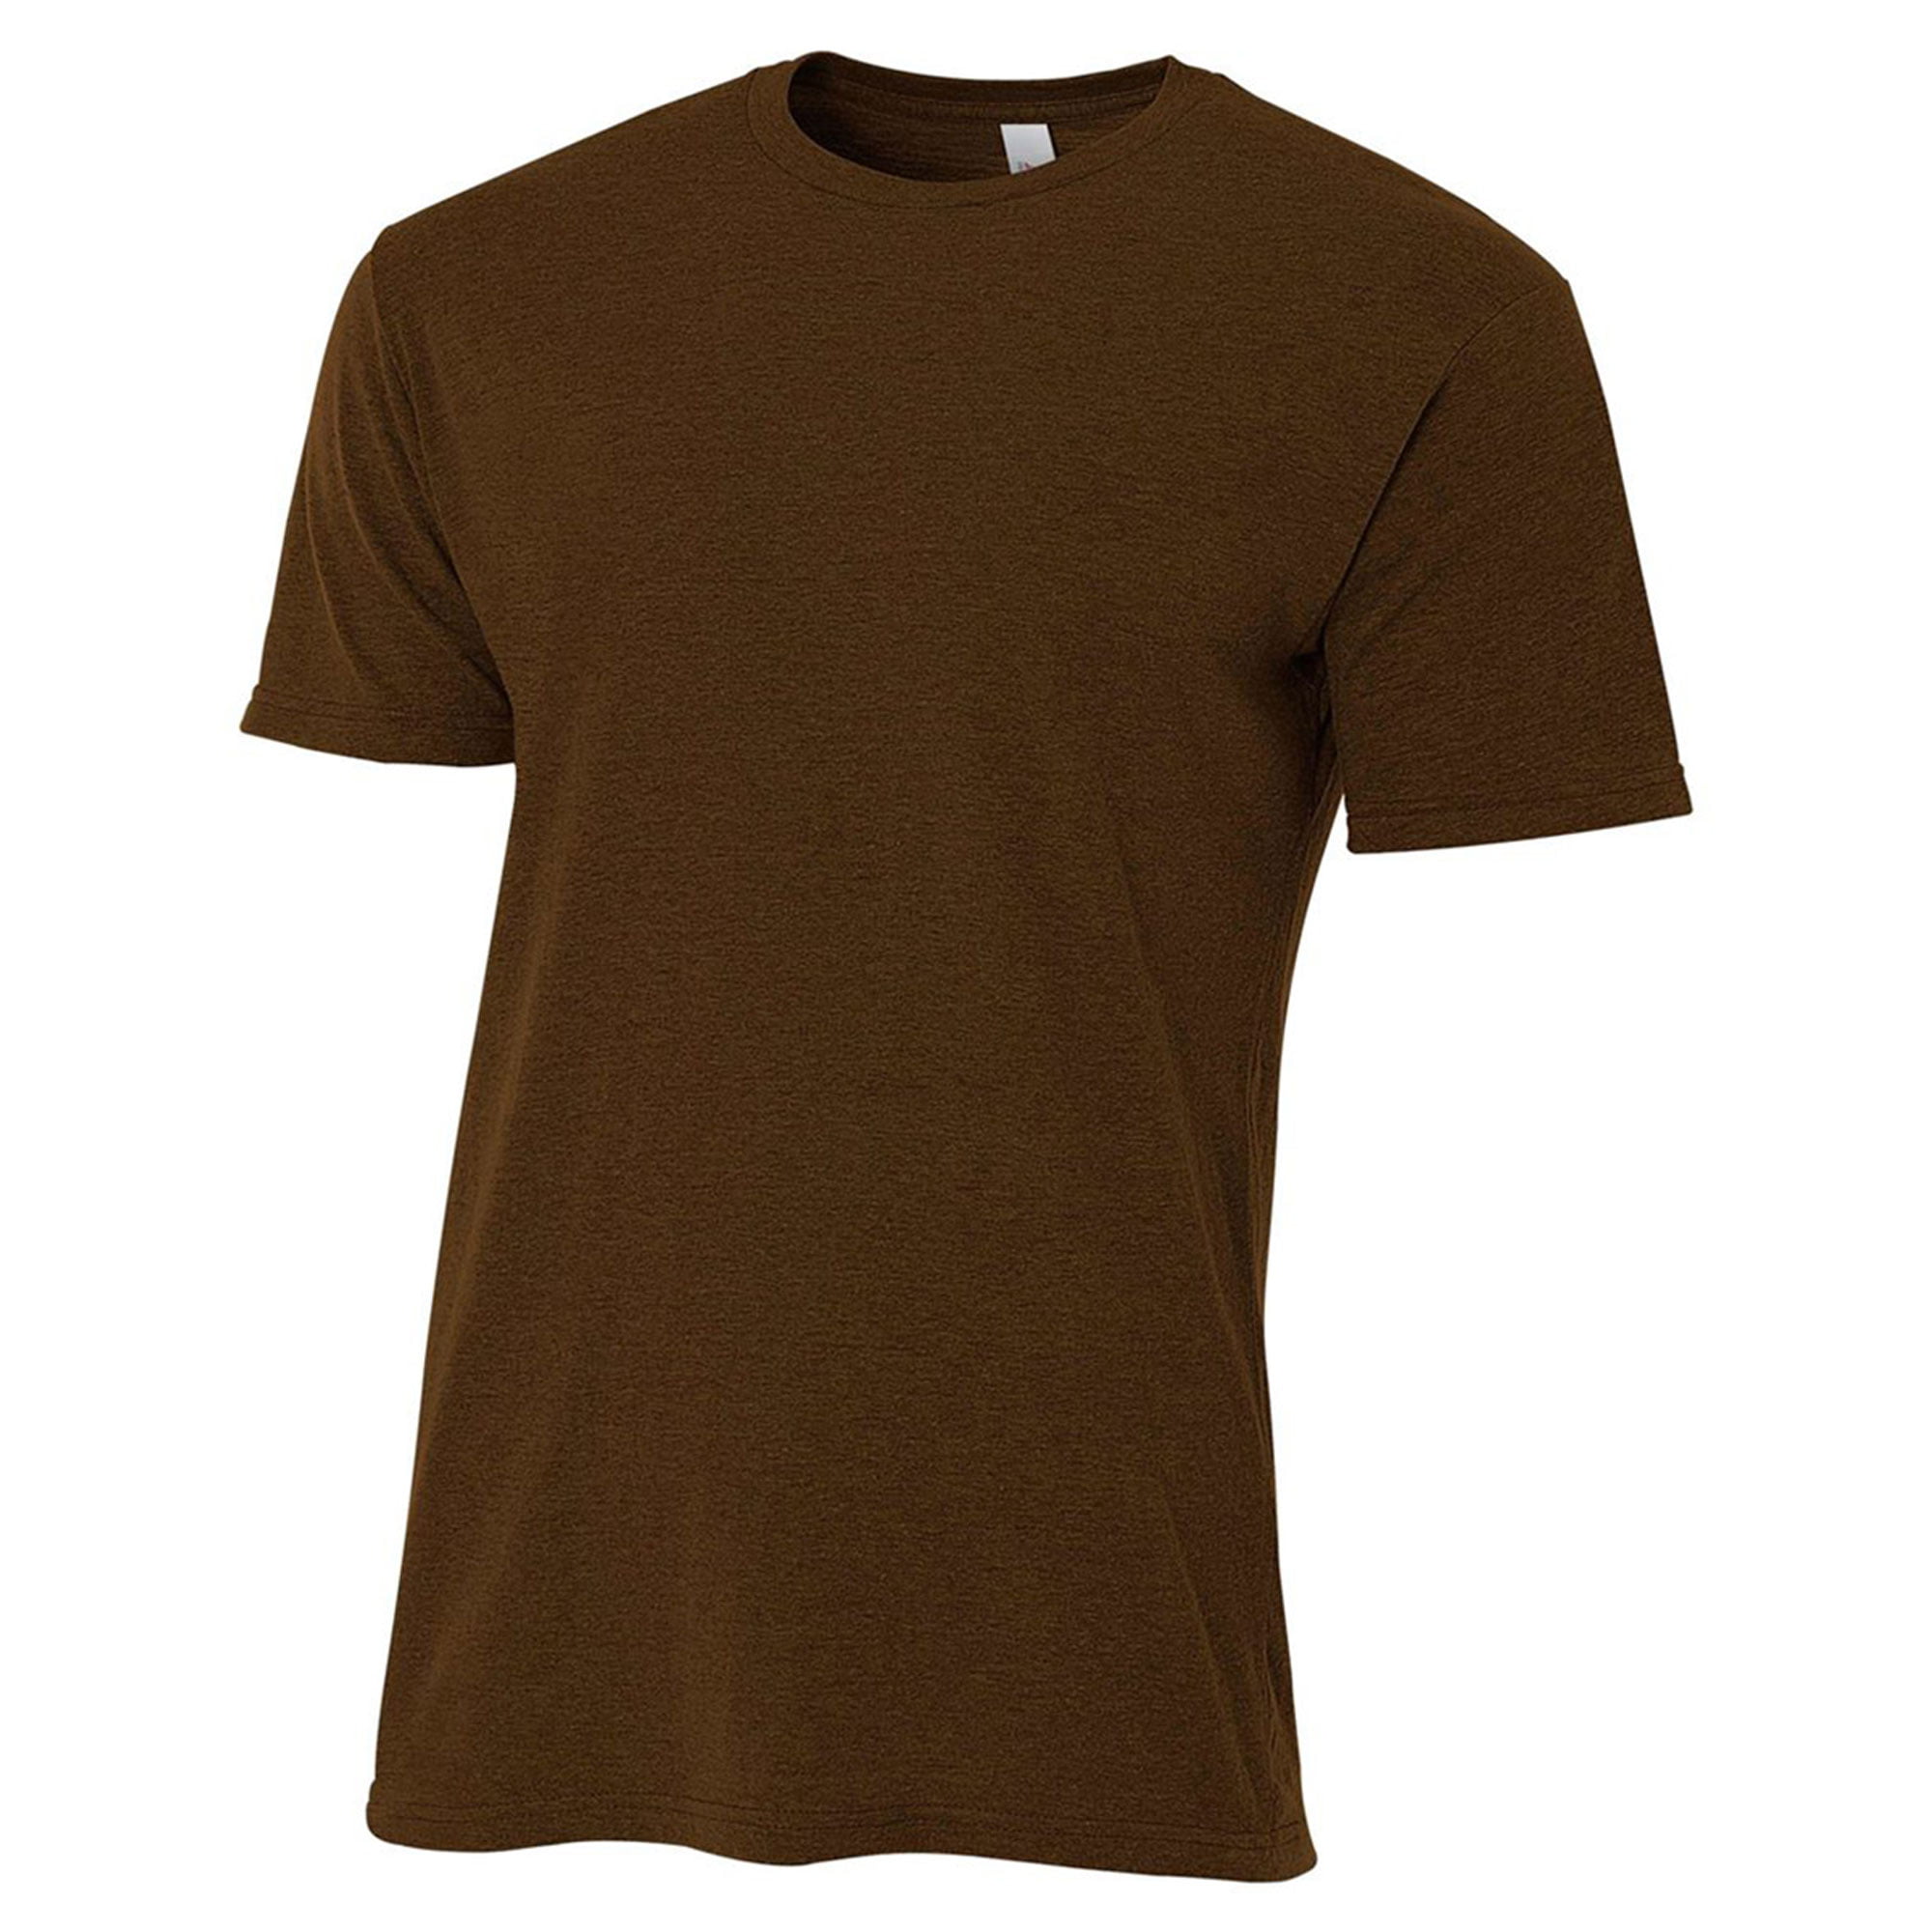 A4 Men's Rib Knit Side Seamed Shoulder Taping T-Shirt